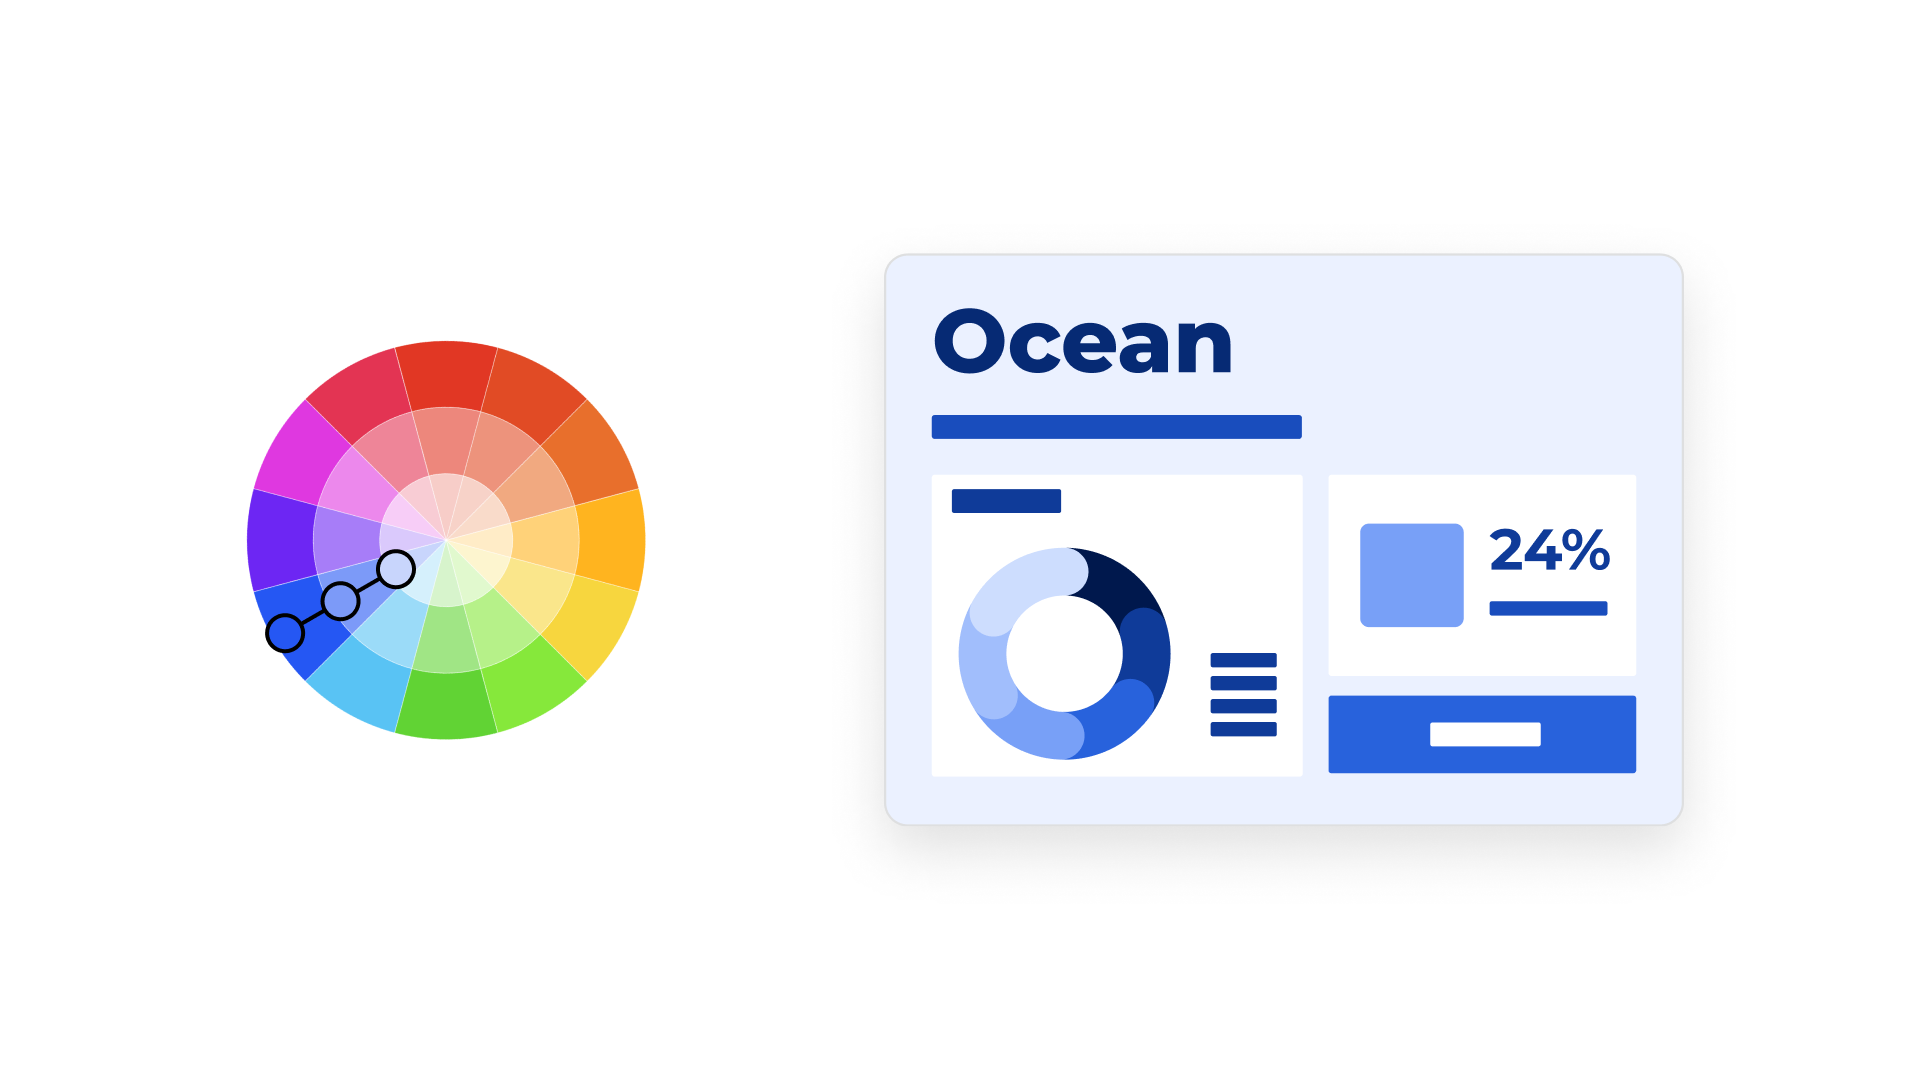 Monochromatic color scheme for Smartsheet dashboards